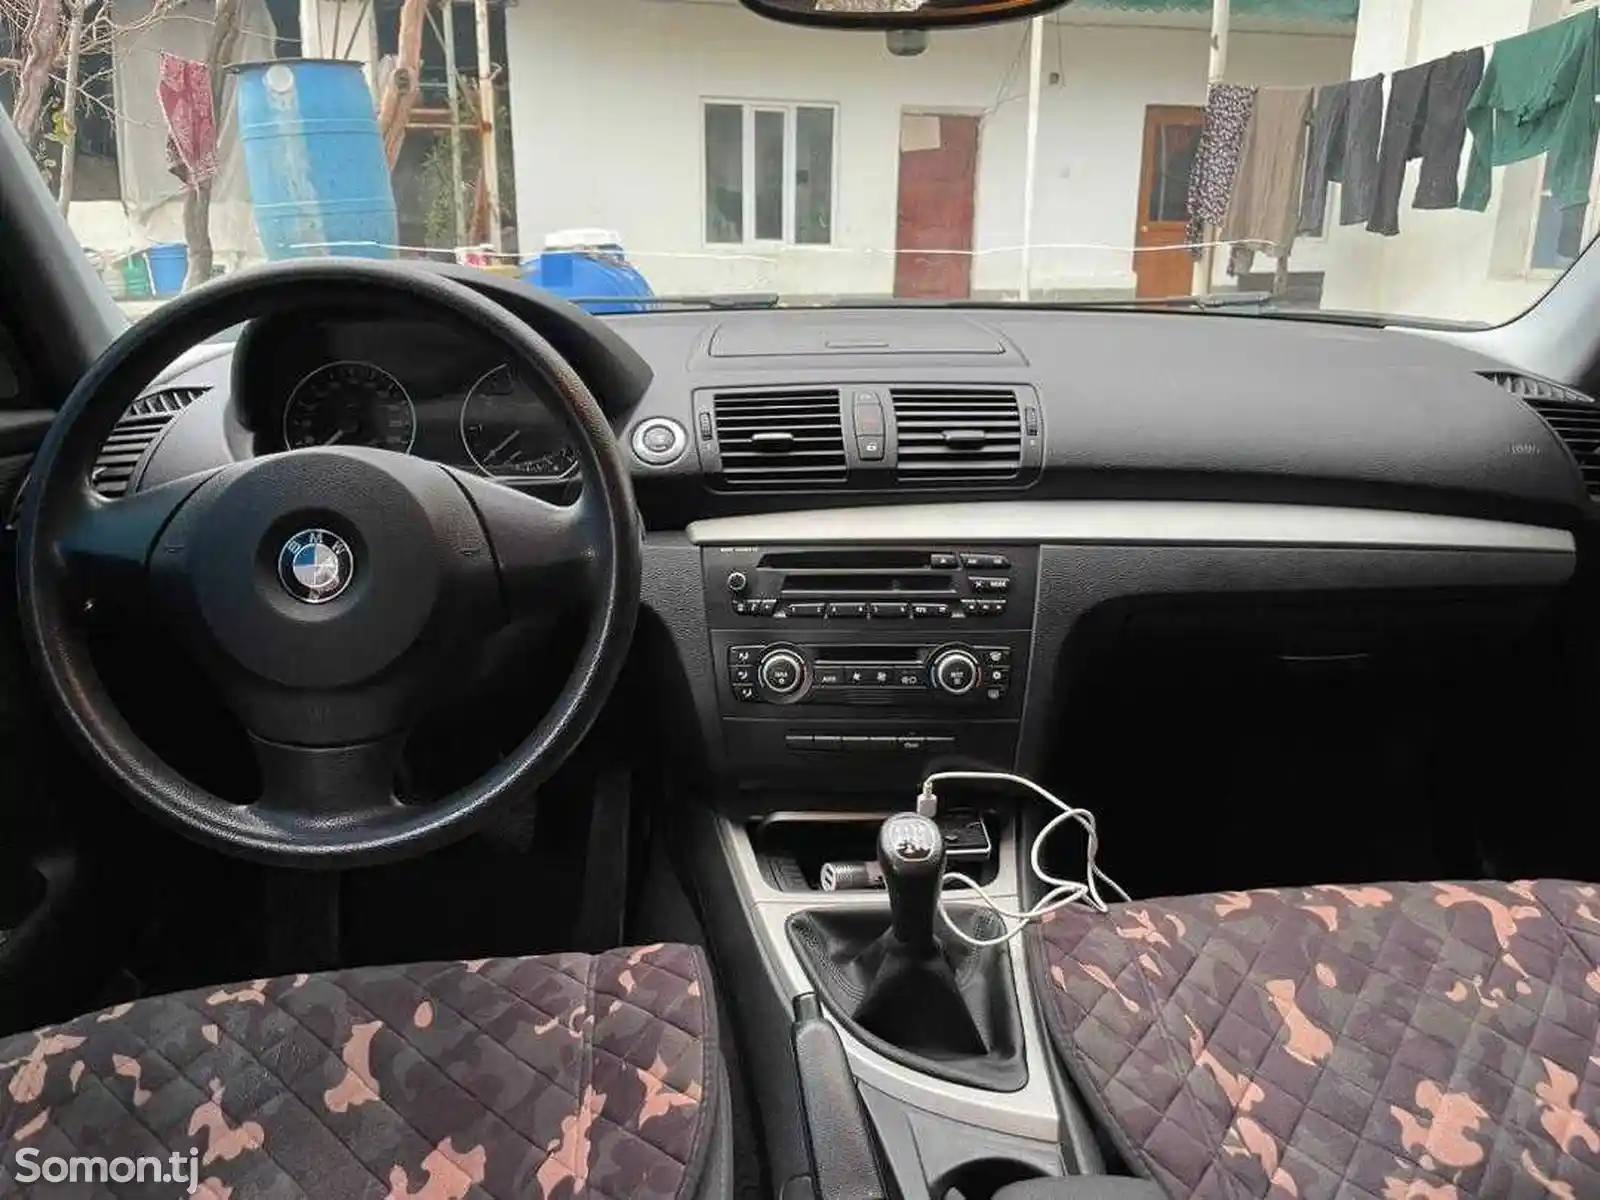 BMW 1 series, 2009-2